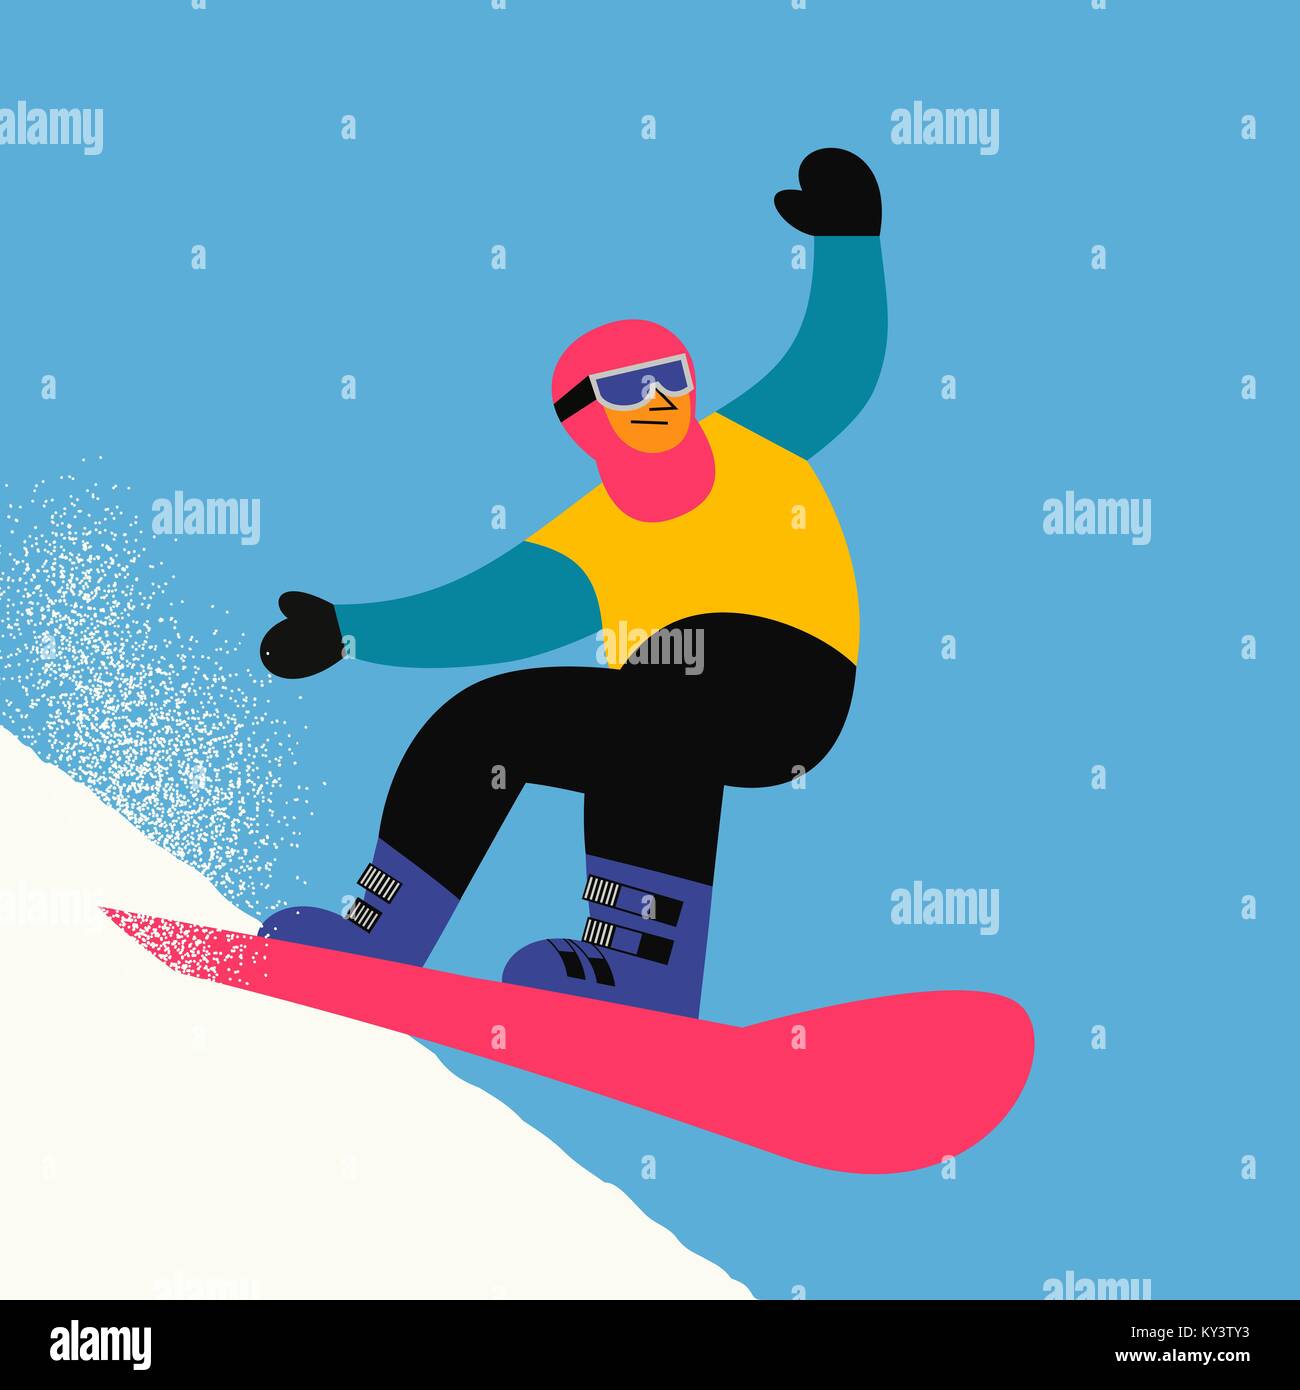 Cartoon Snowboarder Stock Photos & Cartoon Snowboarder Stock Images - Alamy